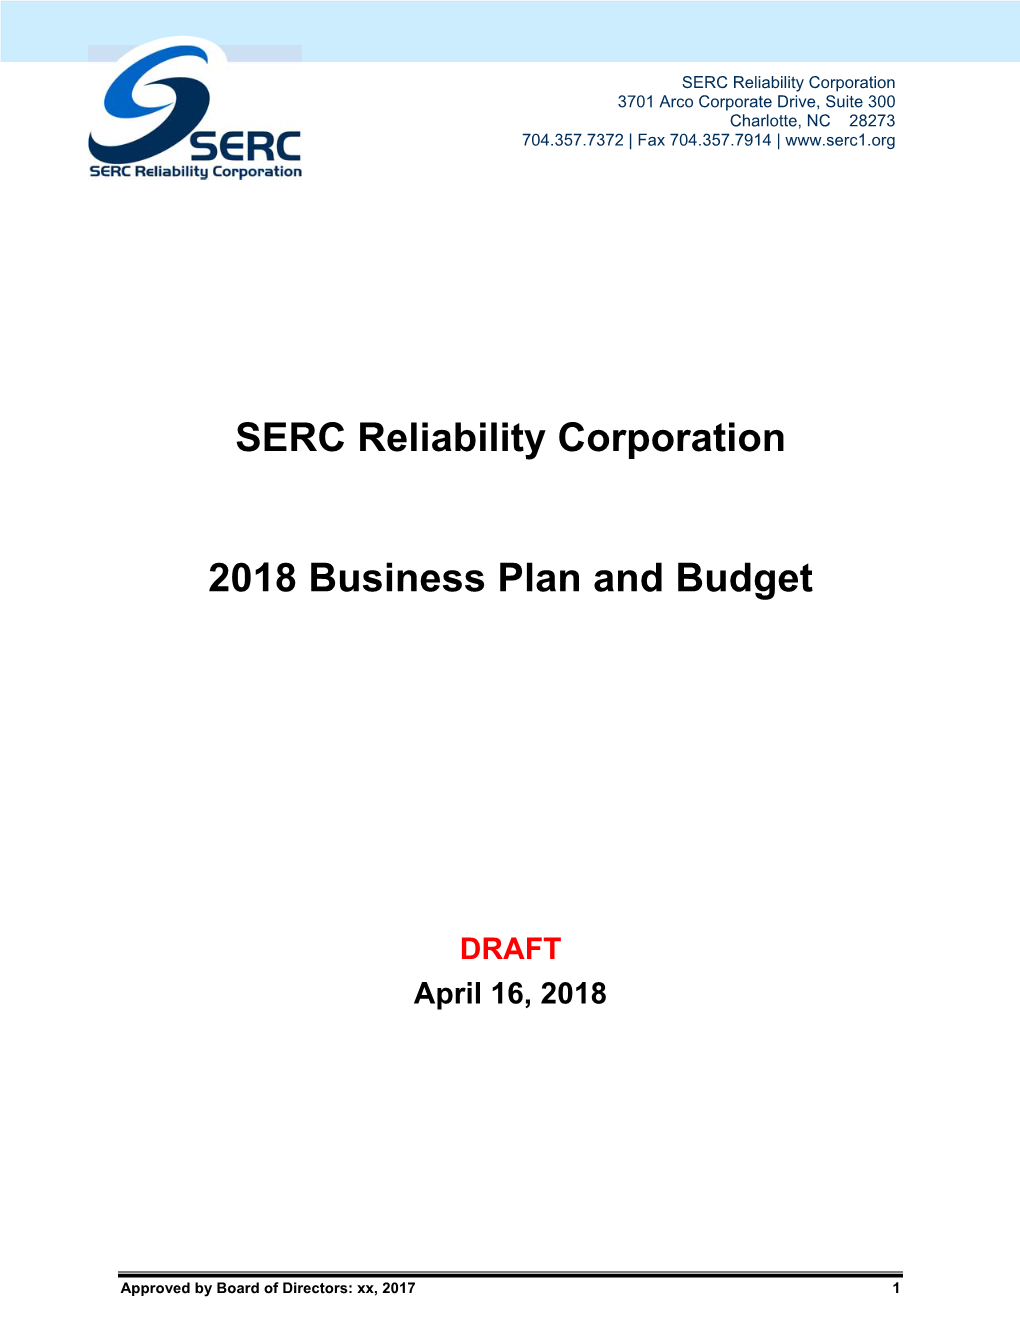 SERC Reliability Corporation 2018 Business Plan and Budget